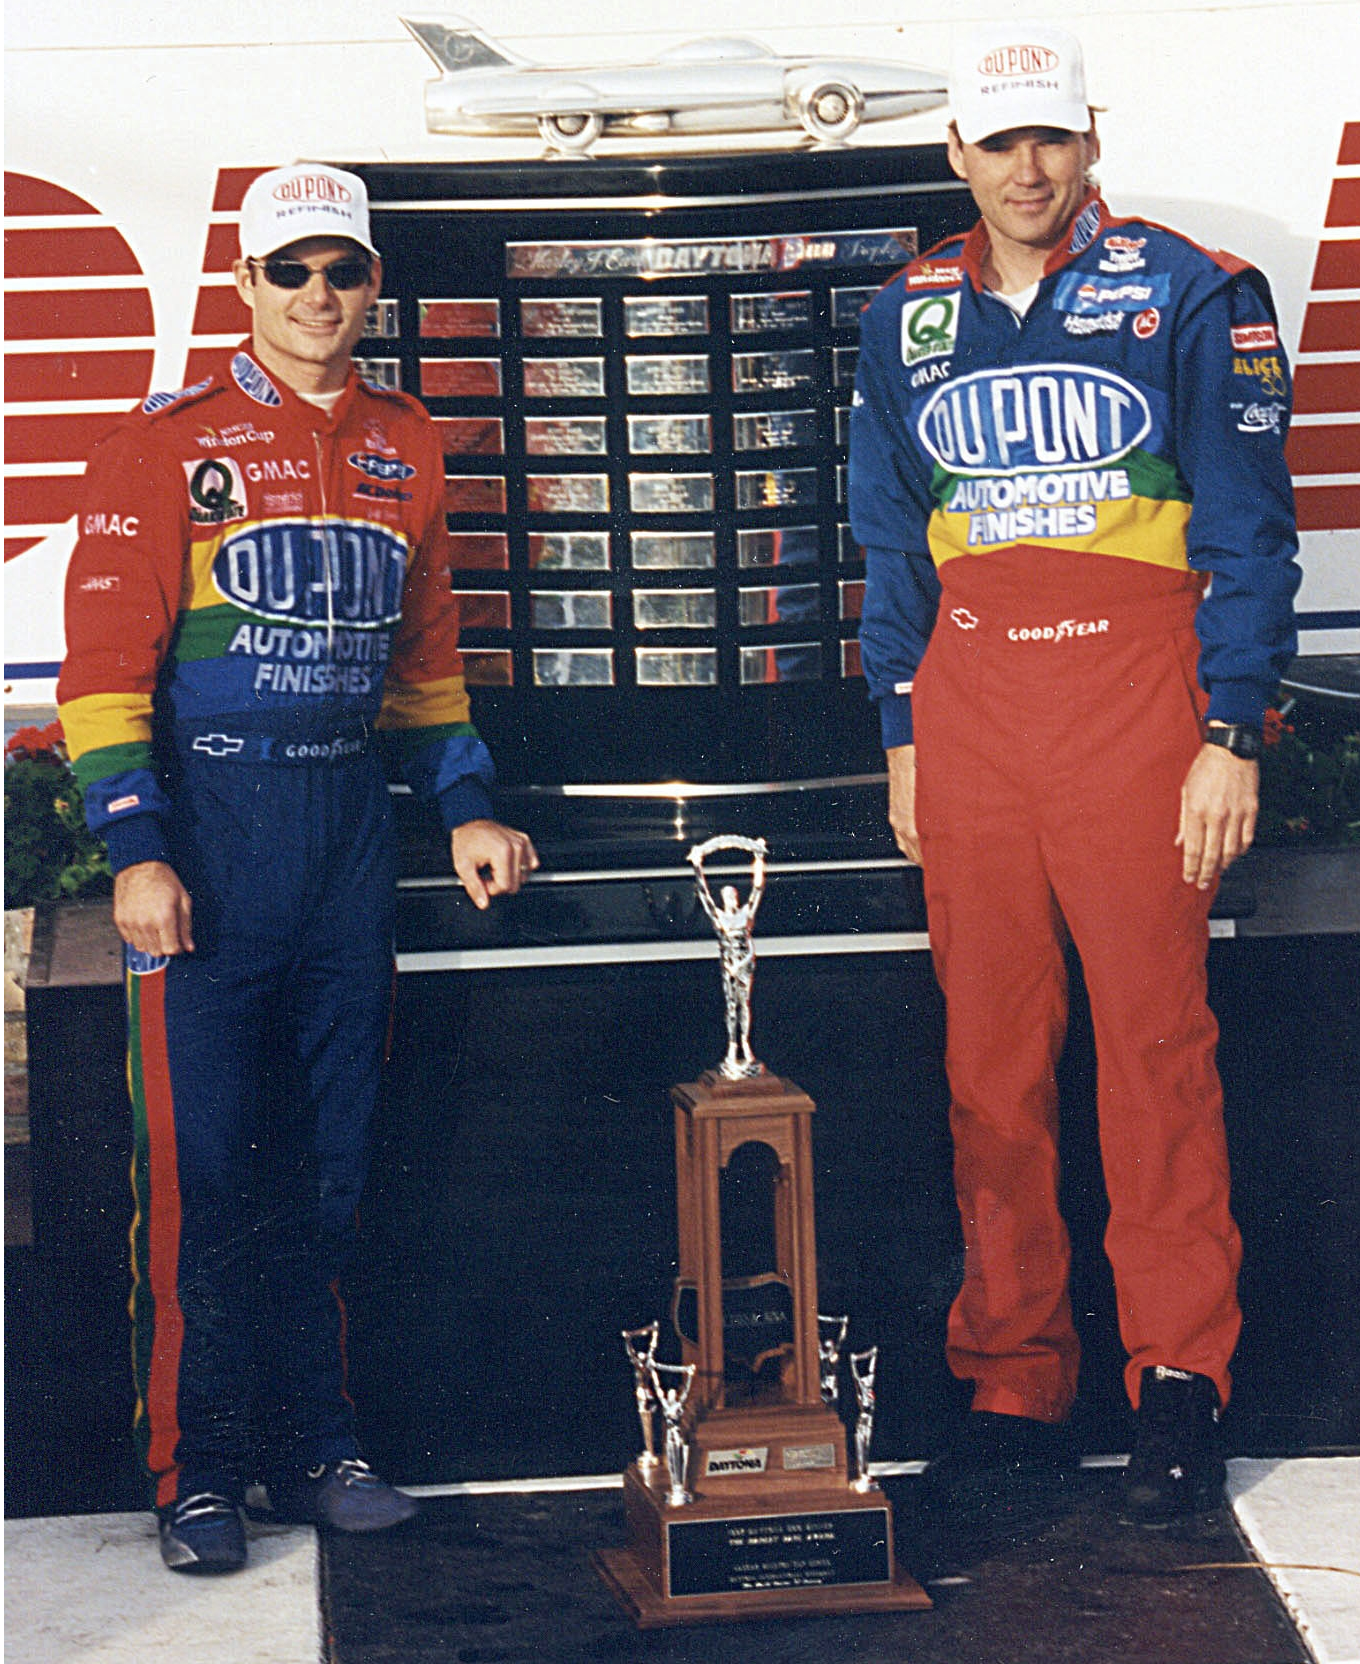 All things considered, the '96 season inspired Gordon and Evernham to win the 1997 Daytona 500.